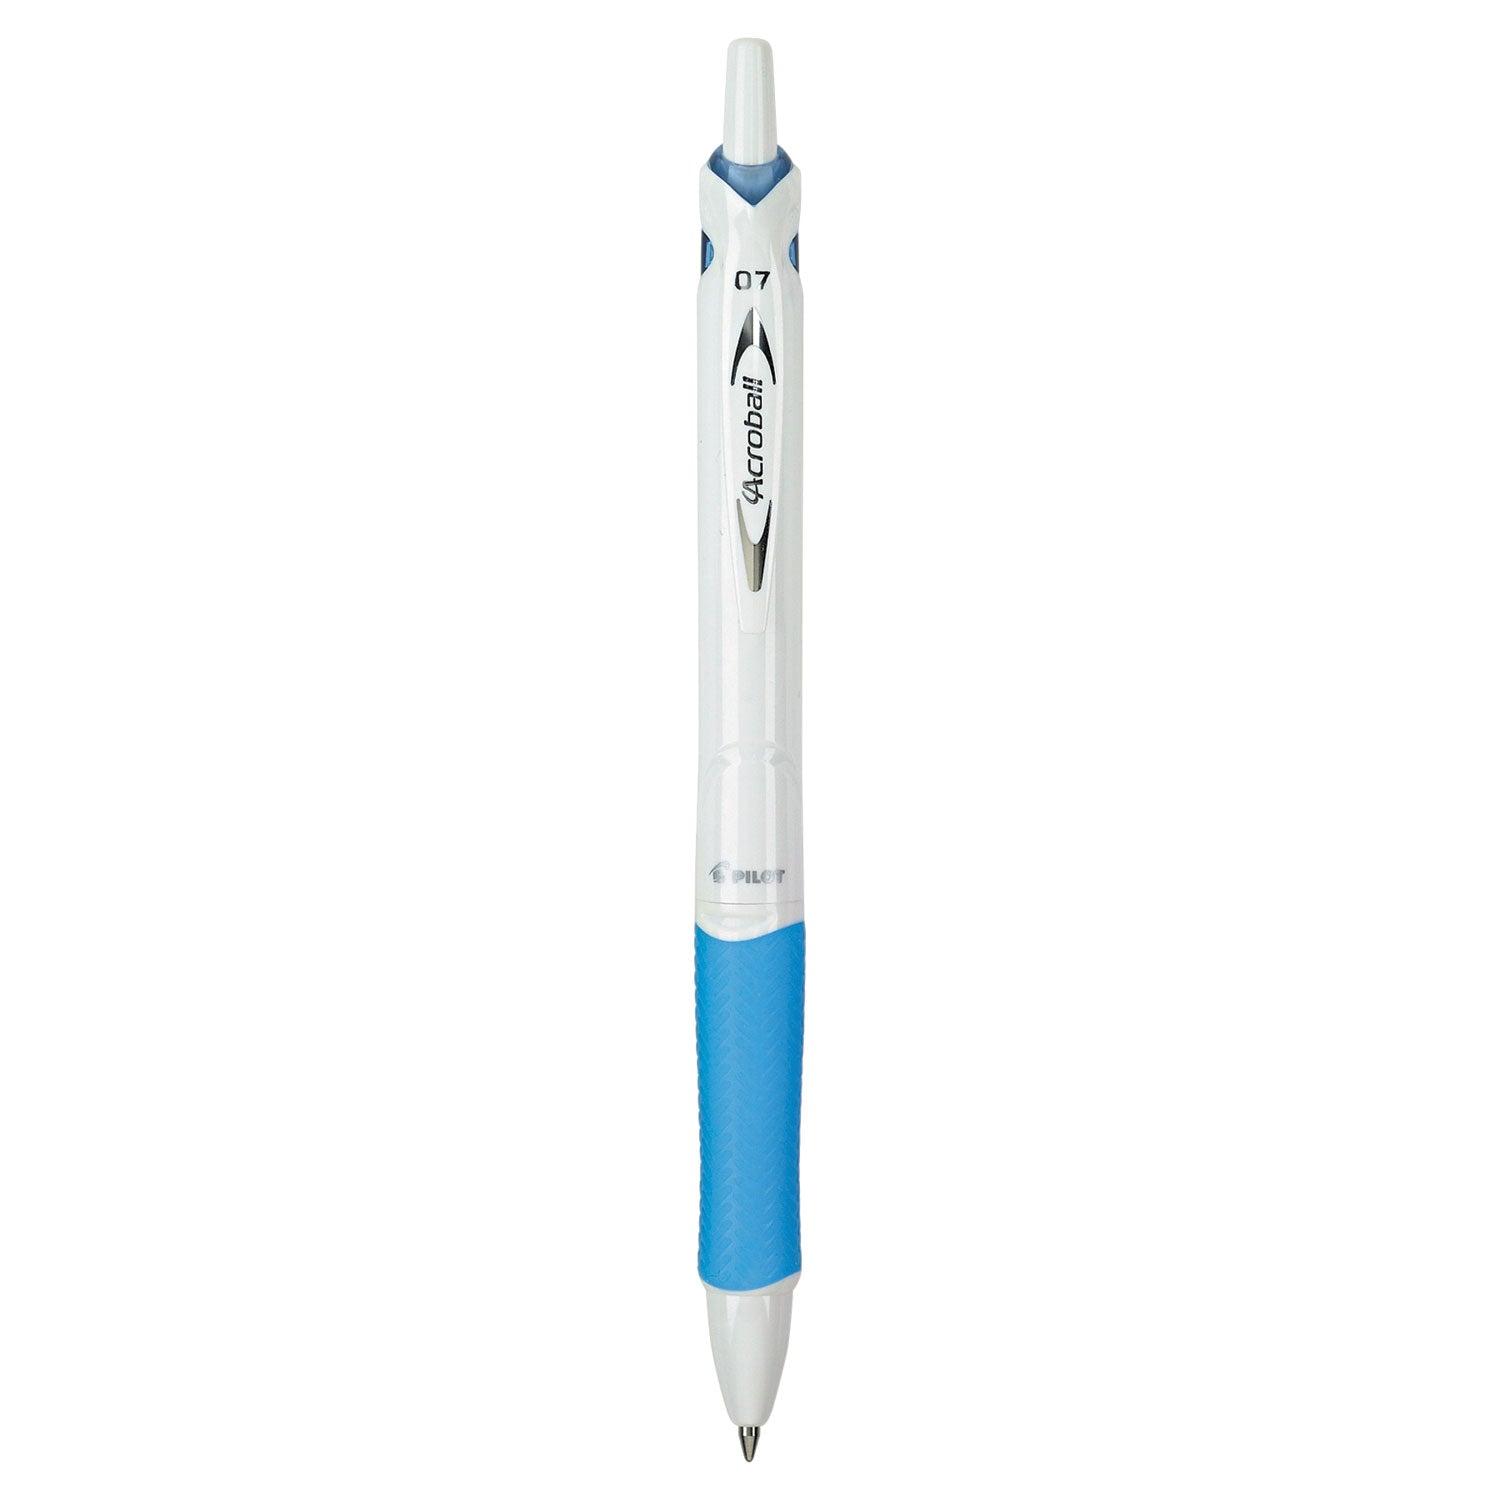 Acroball PureWhite Advanced Ink Hybrid Gel Pen, Retractable, Fine 0.7 mm, Black Ink, White/Blue Barrel - 